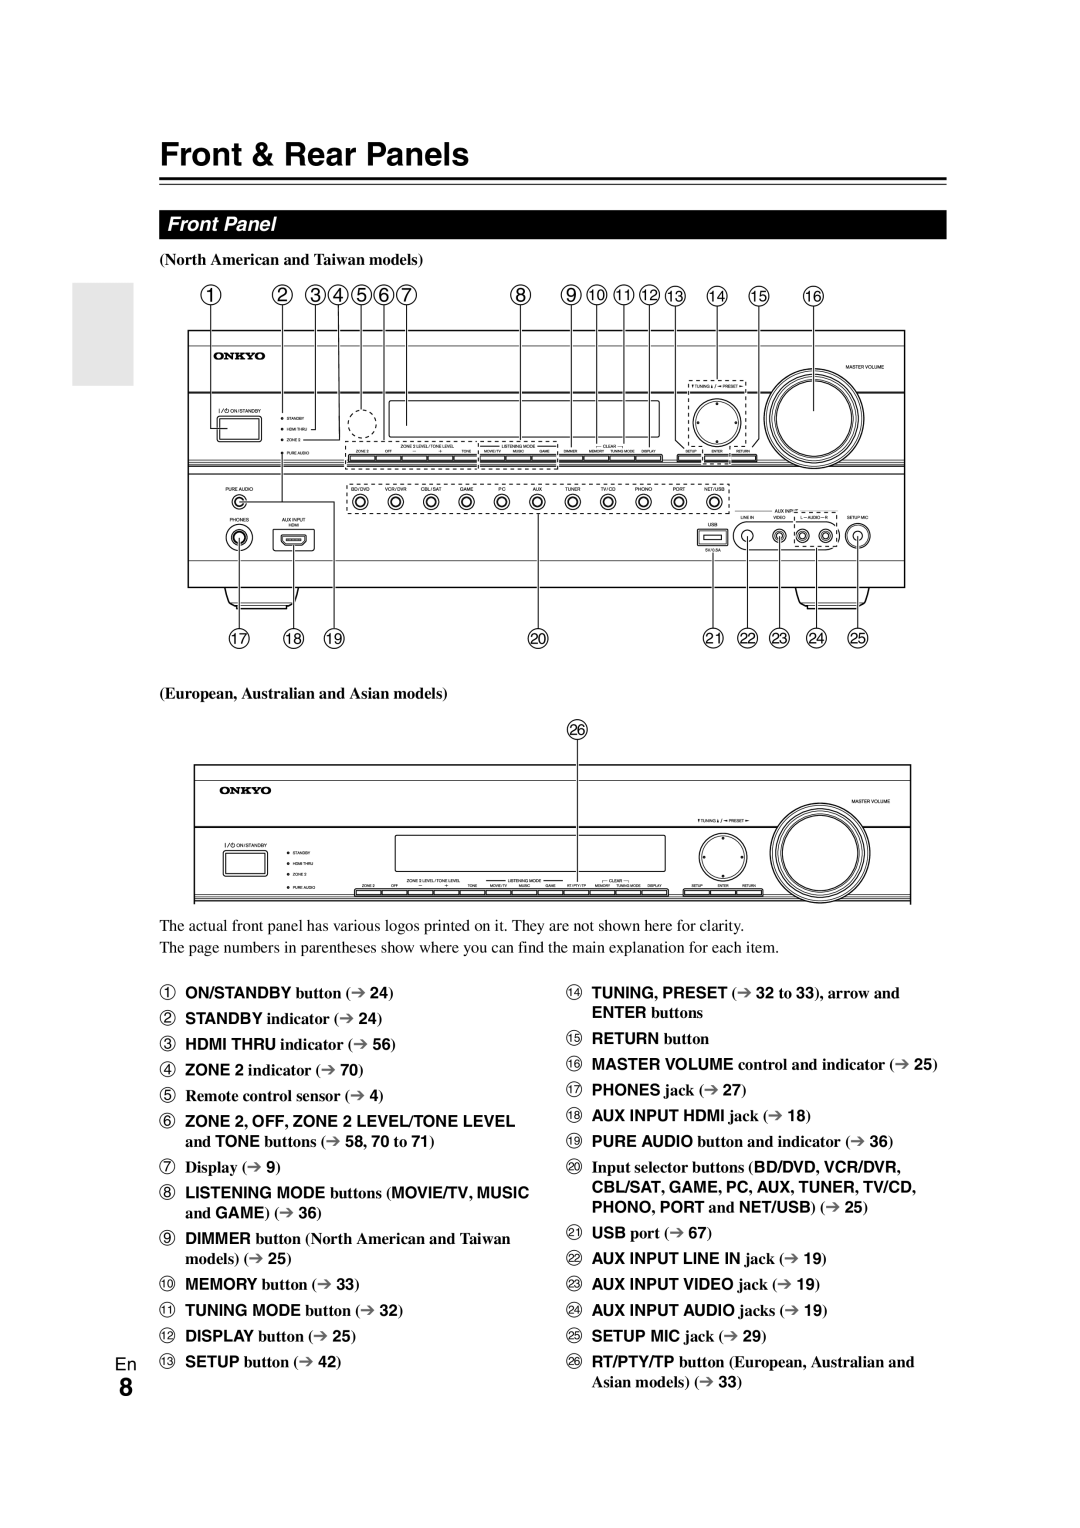 Onkyo TX-NR708 Front & Rear Panels, b cdefg, ij klm n o p, u v w x y, Front Panel, a ON/STANDBY button, o RETURN button 